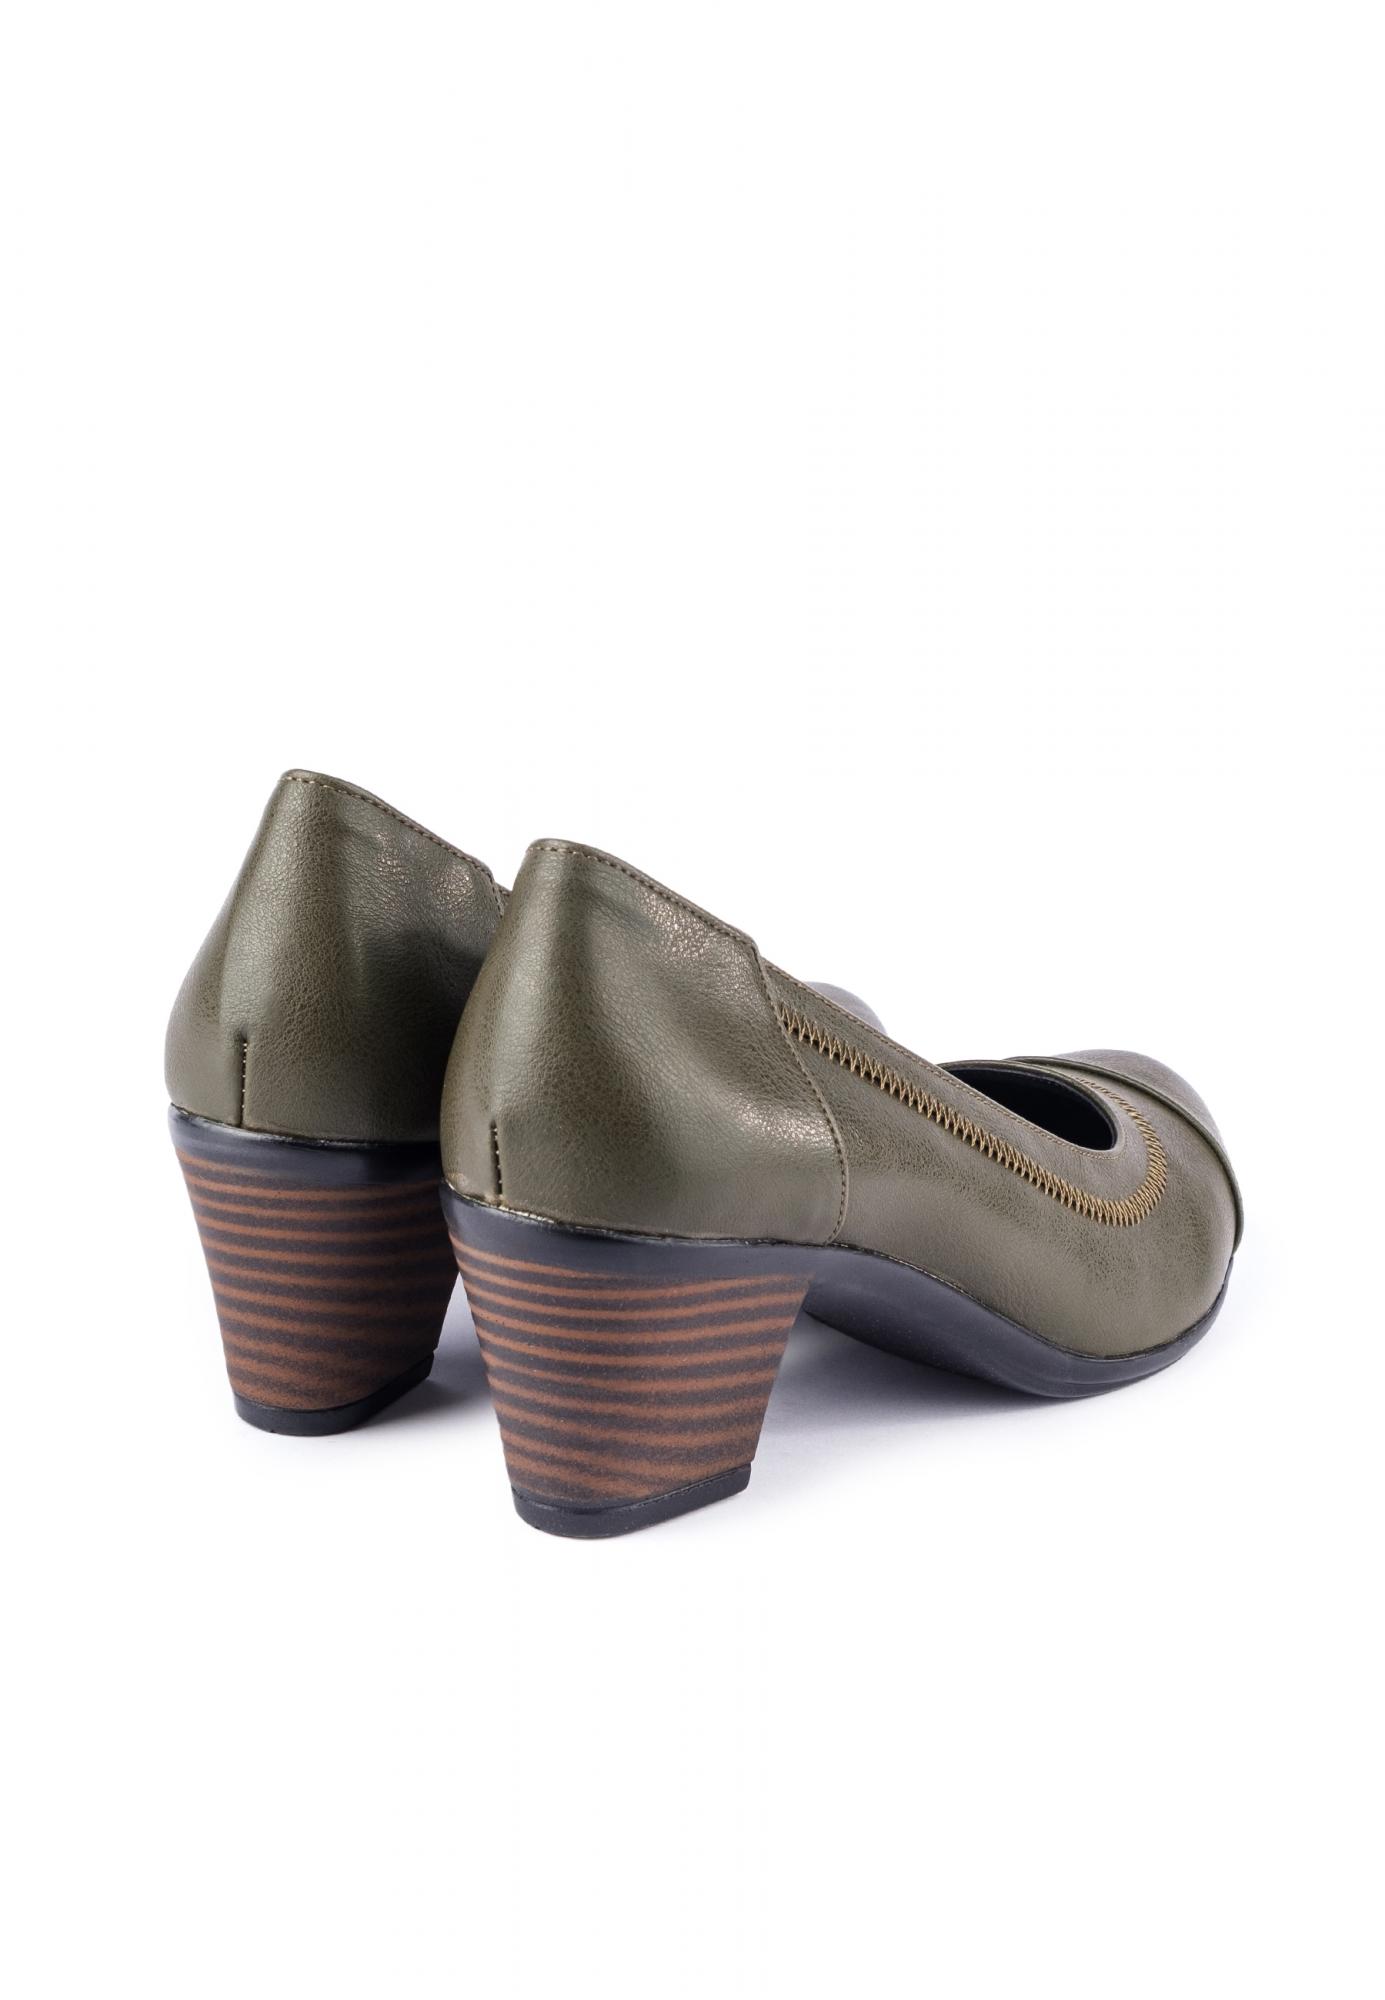 Ženske cipele D245 - MASLINASTA